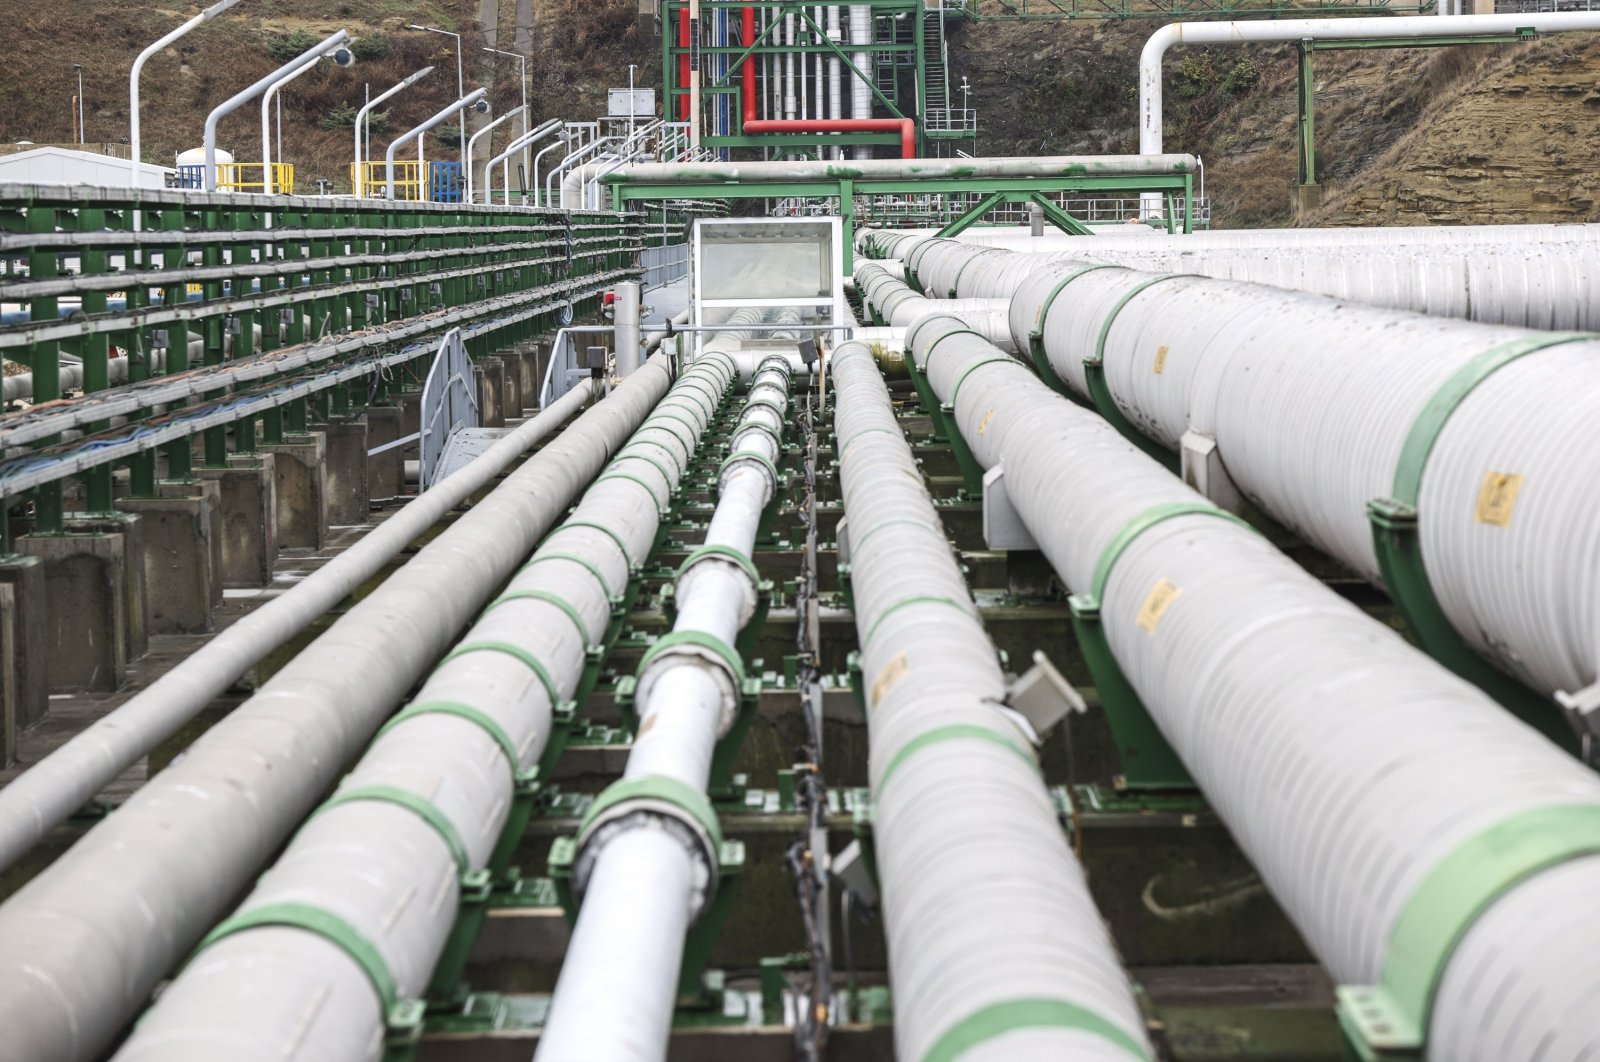 Türkiye dapat memasok gas ke Eropa dari terminal LNG-nya: Menteri